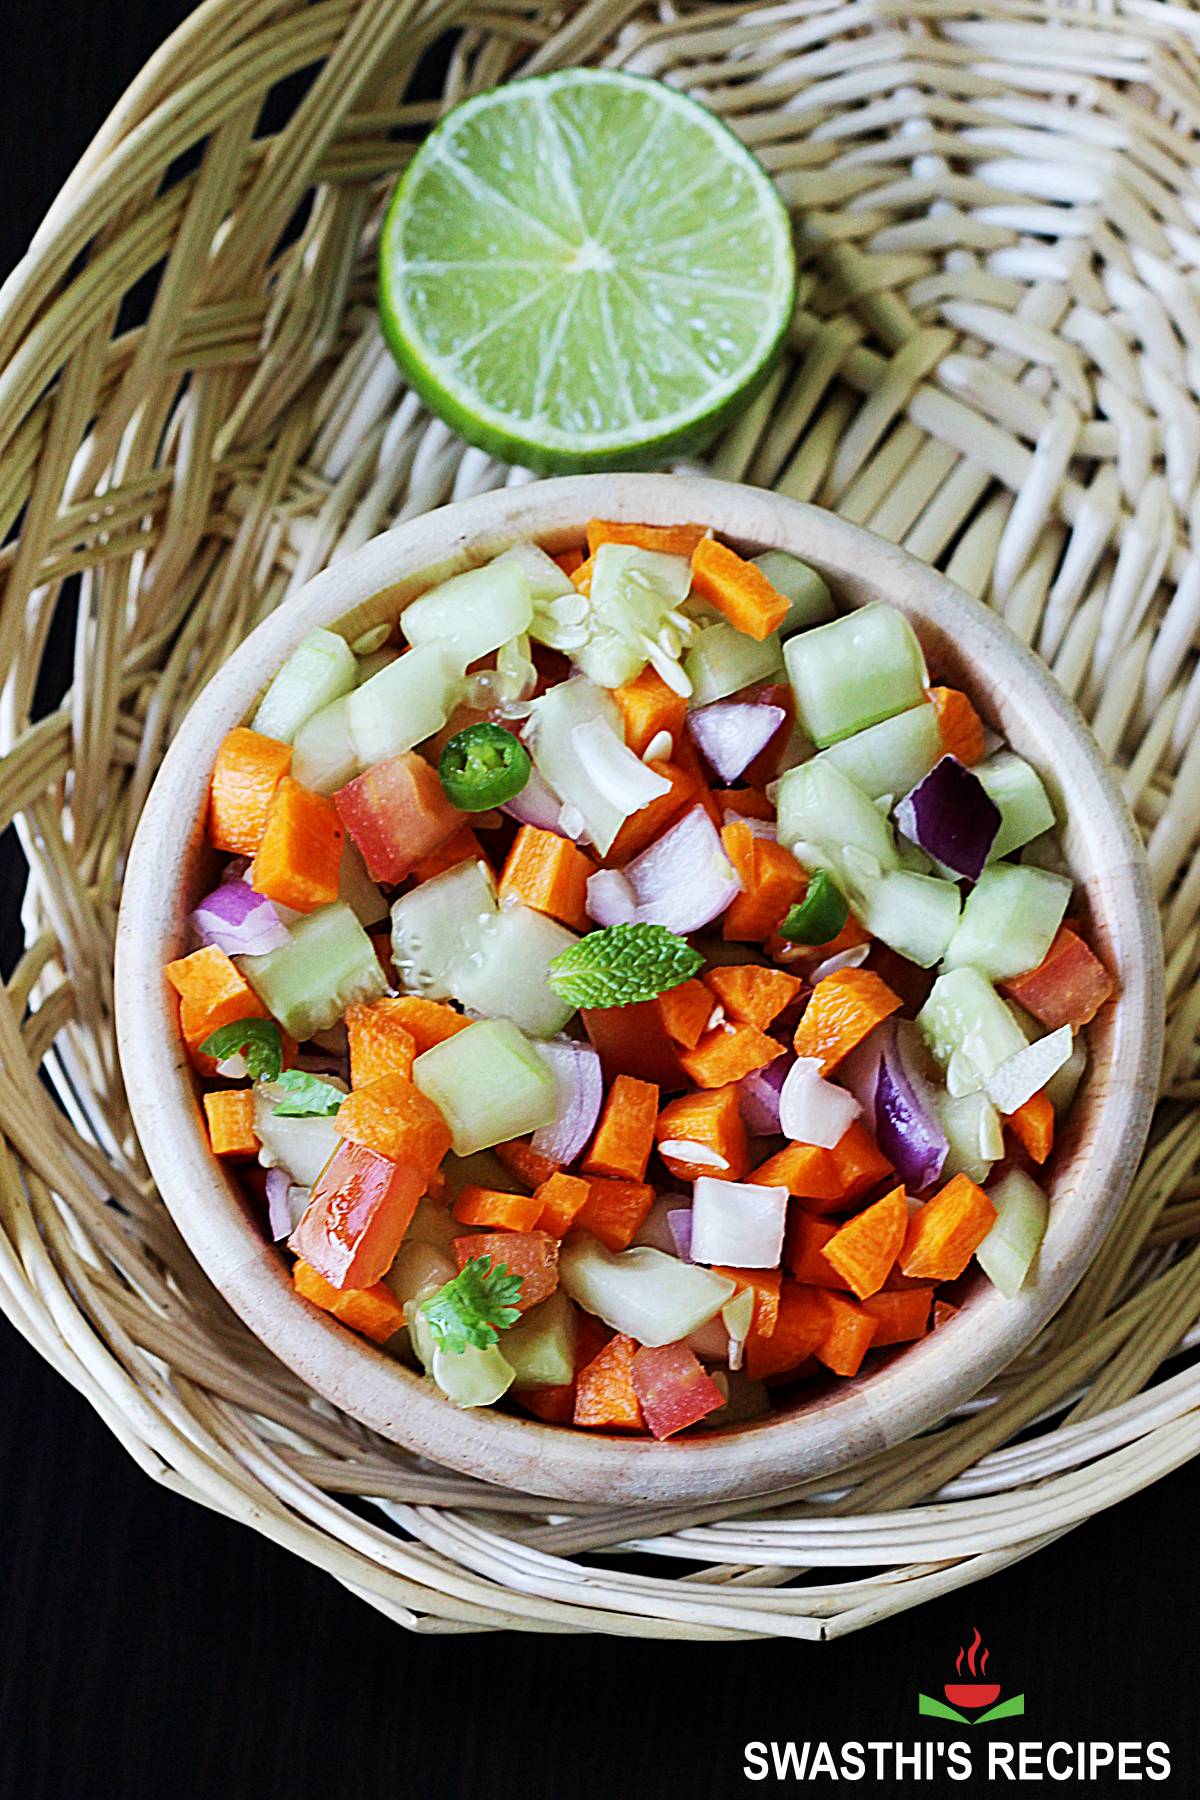 Vegetable salad made with fresh veggies and lime